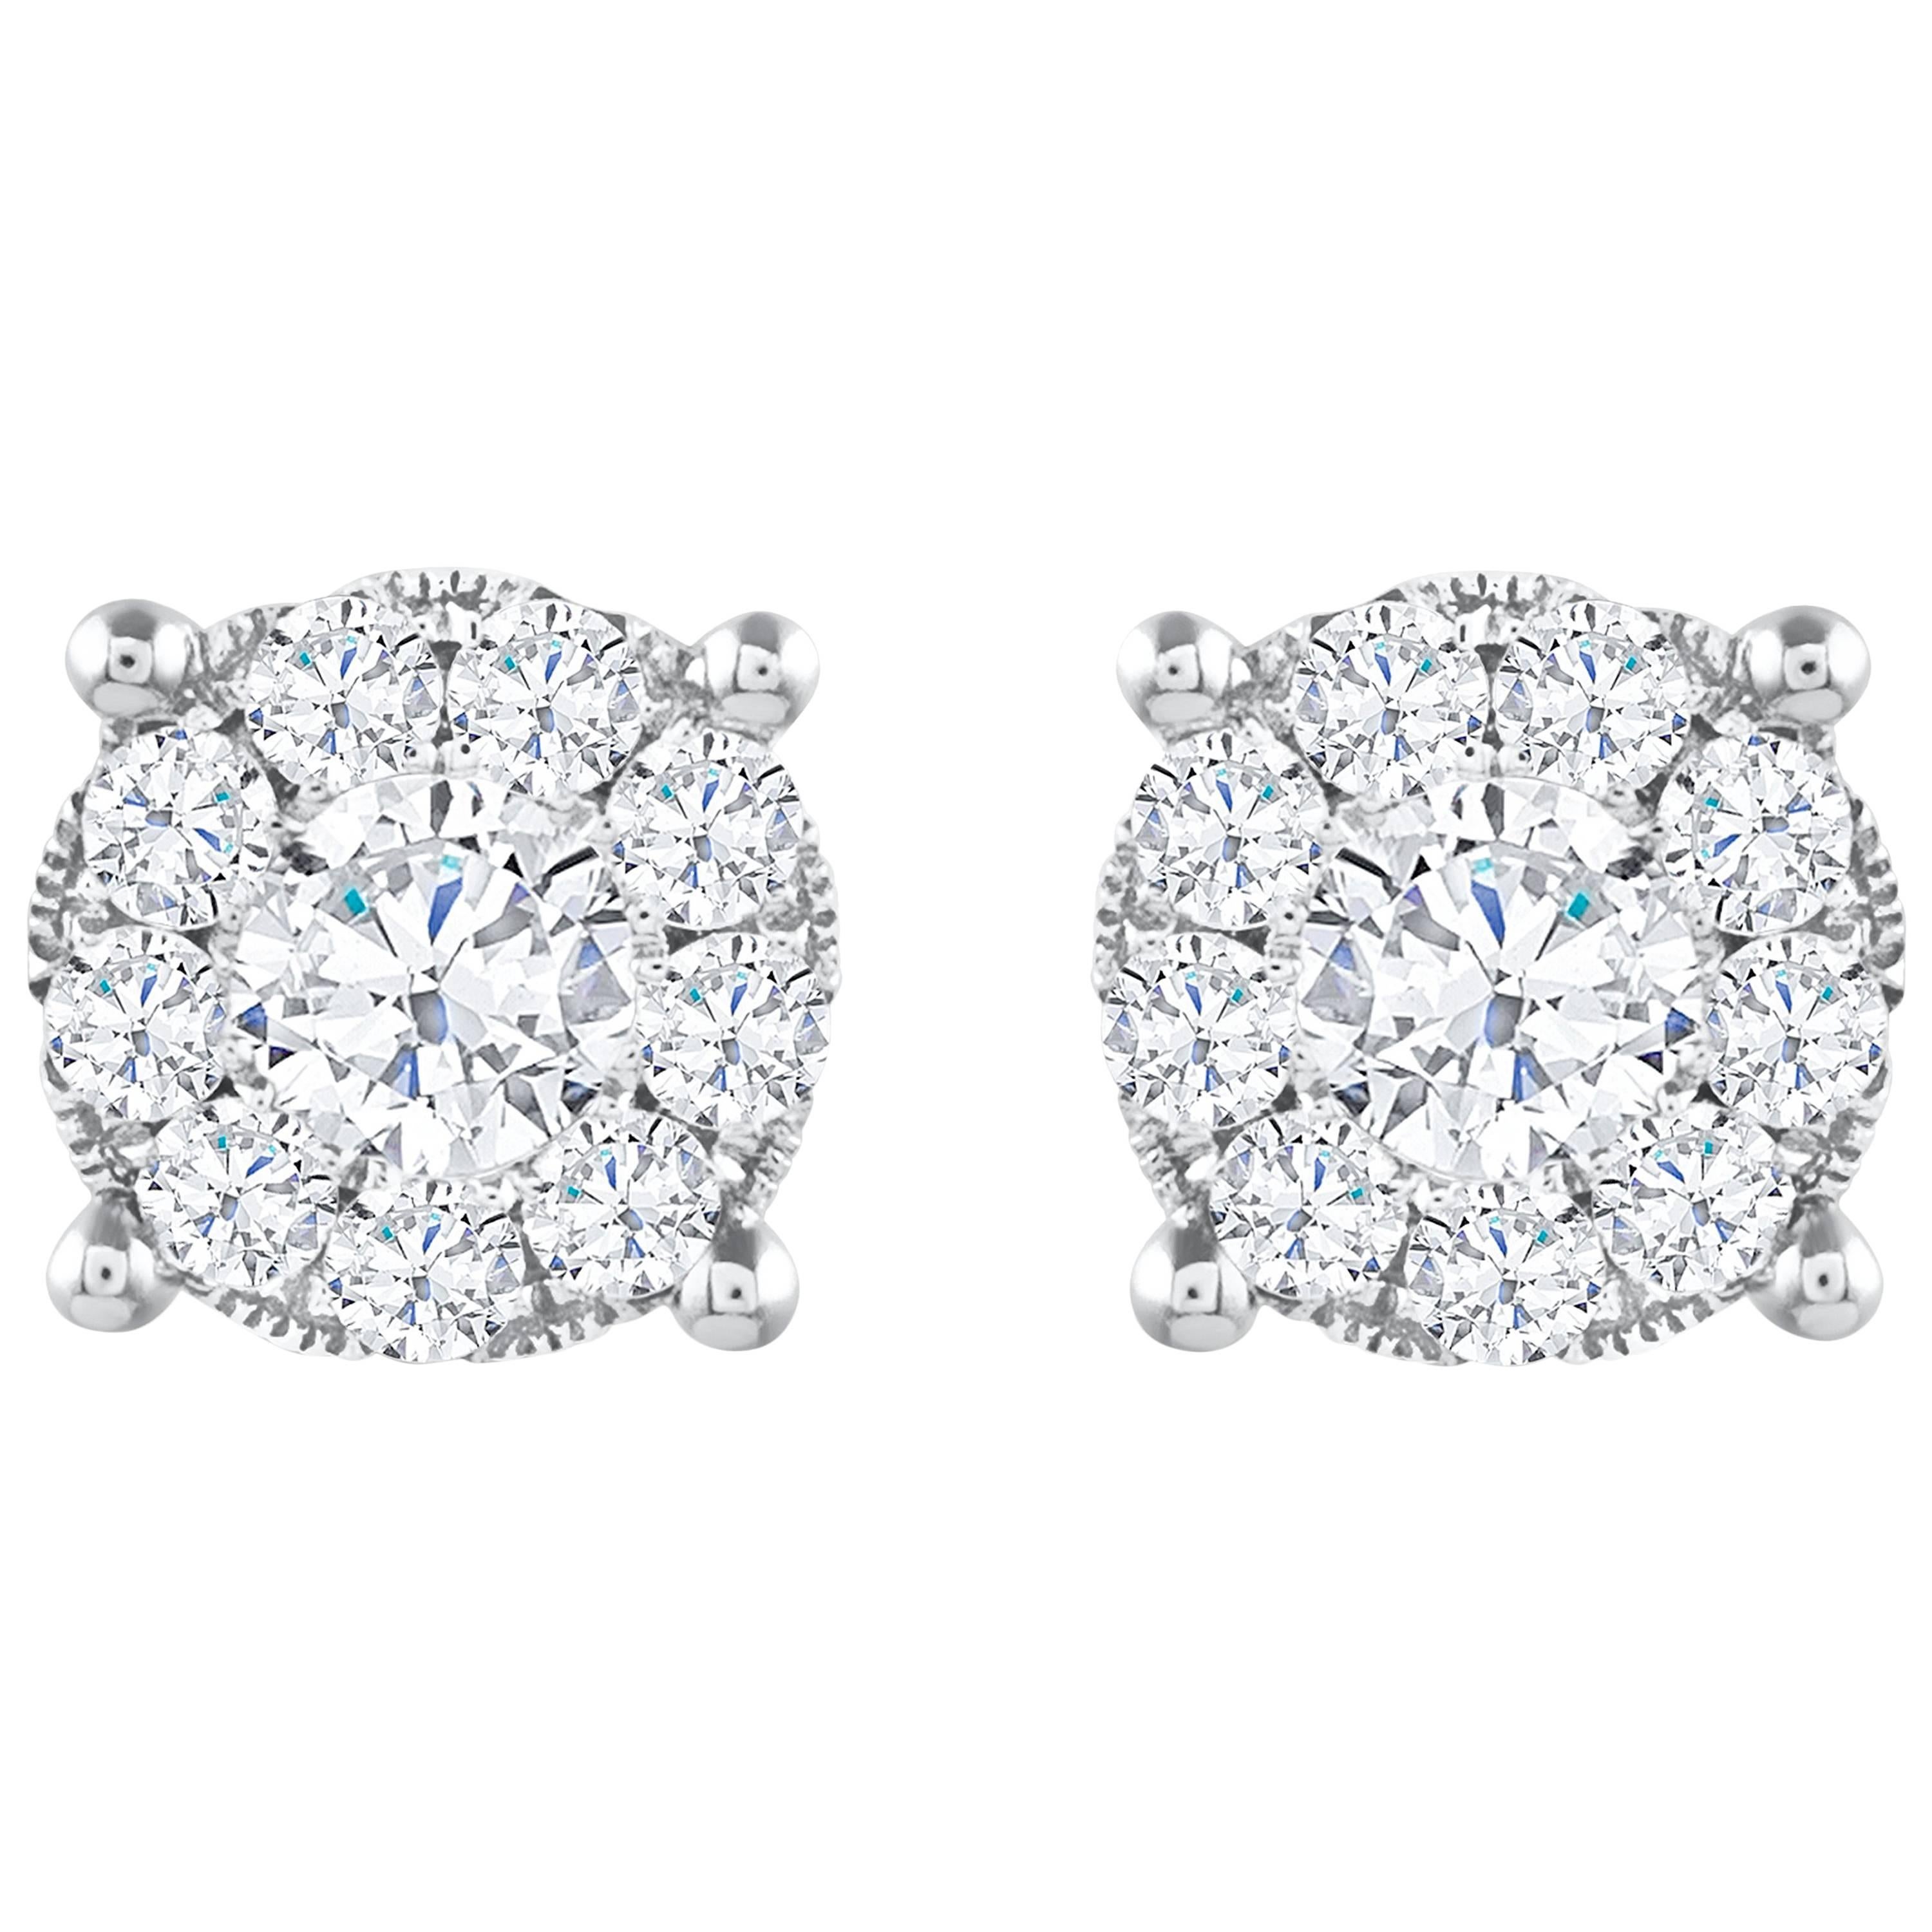 Roman Malakov, 1.29 Carat Total Diamond Cluster Stud Earrings For Sale